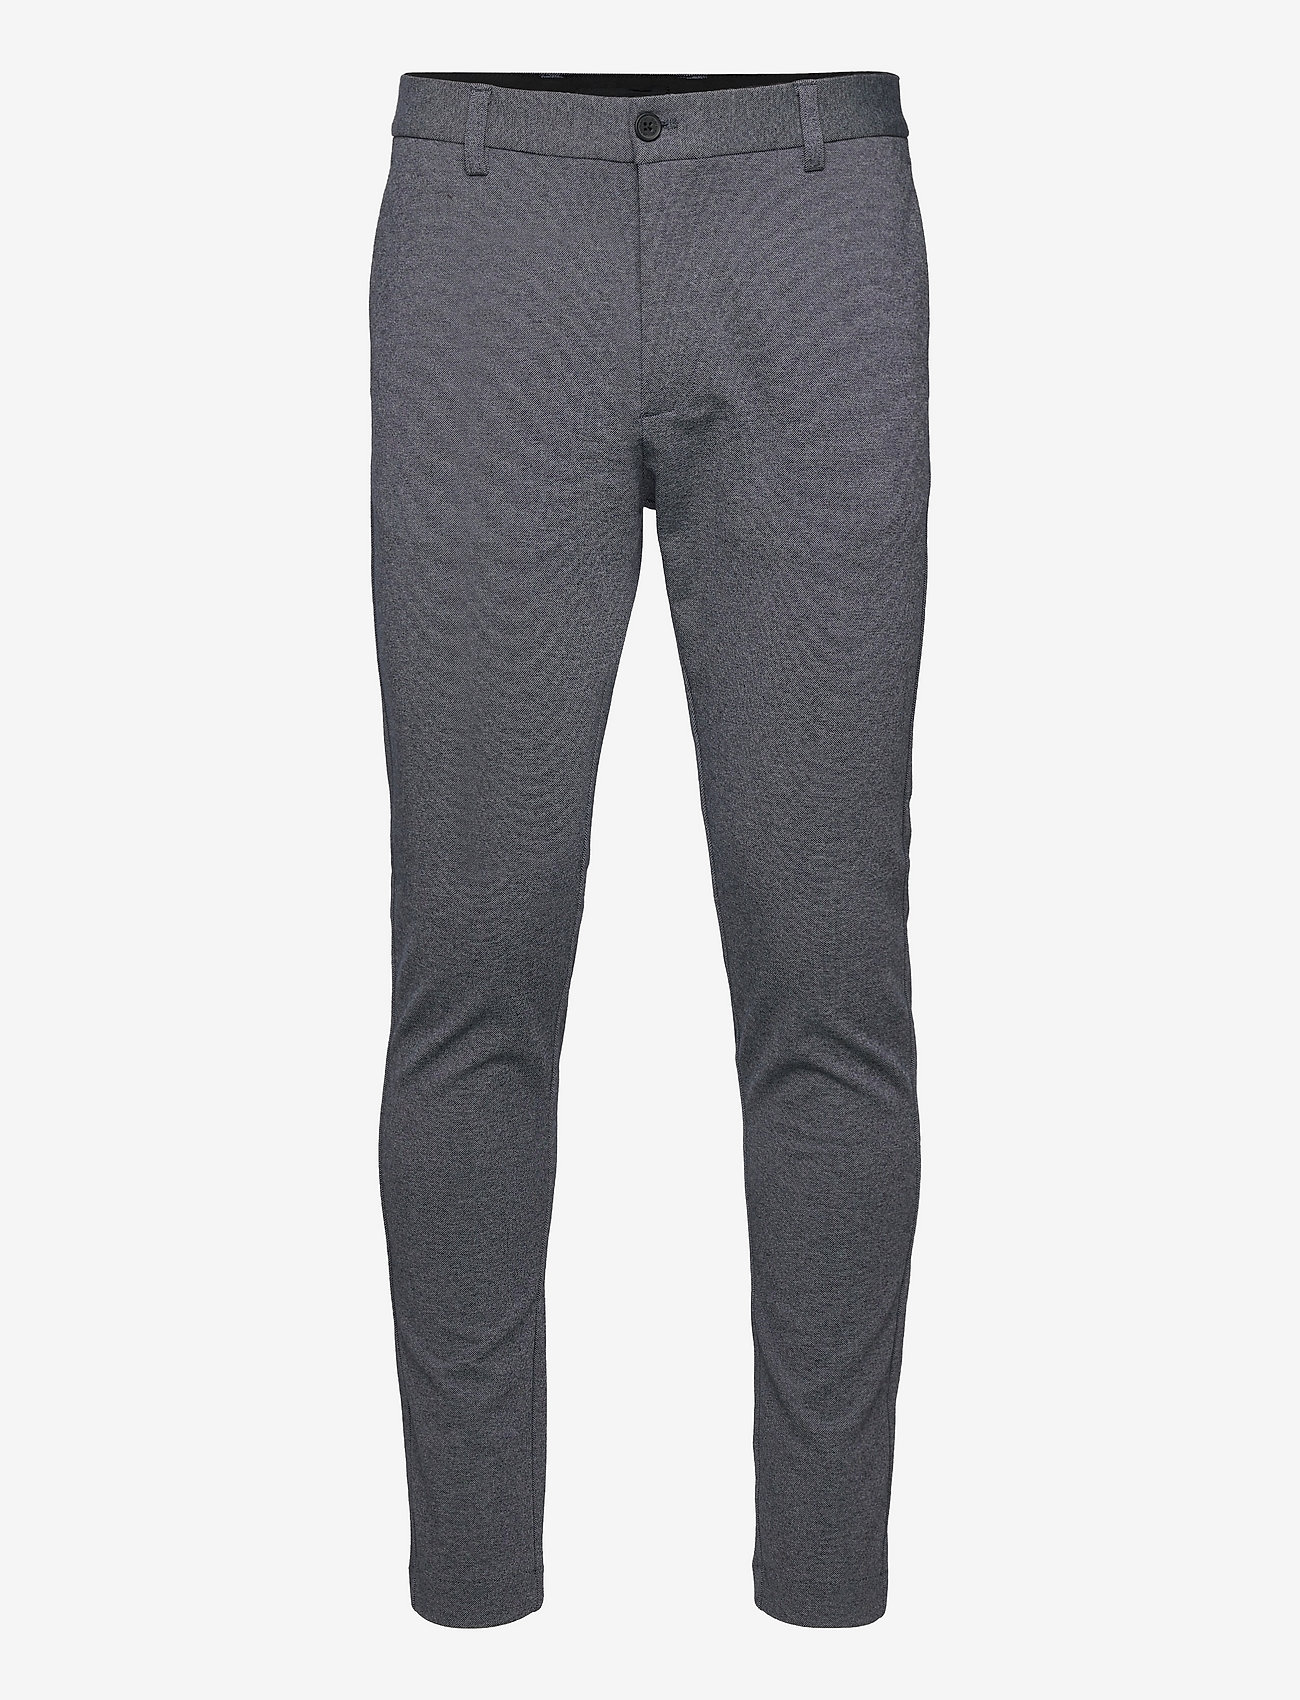 Clean Cut Copenhagen - Milano Jersey Pants - kostiumo kelnės - denim melange - 0